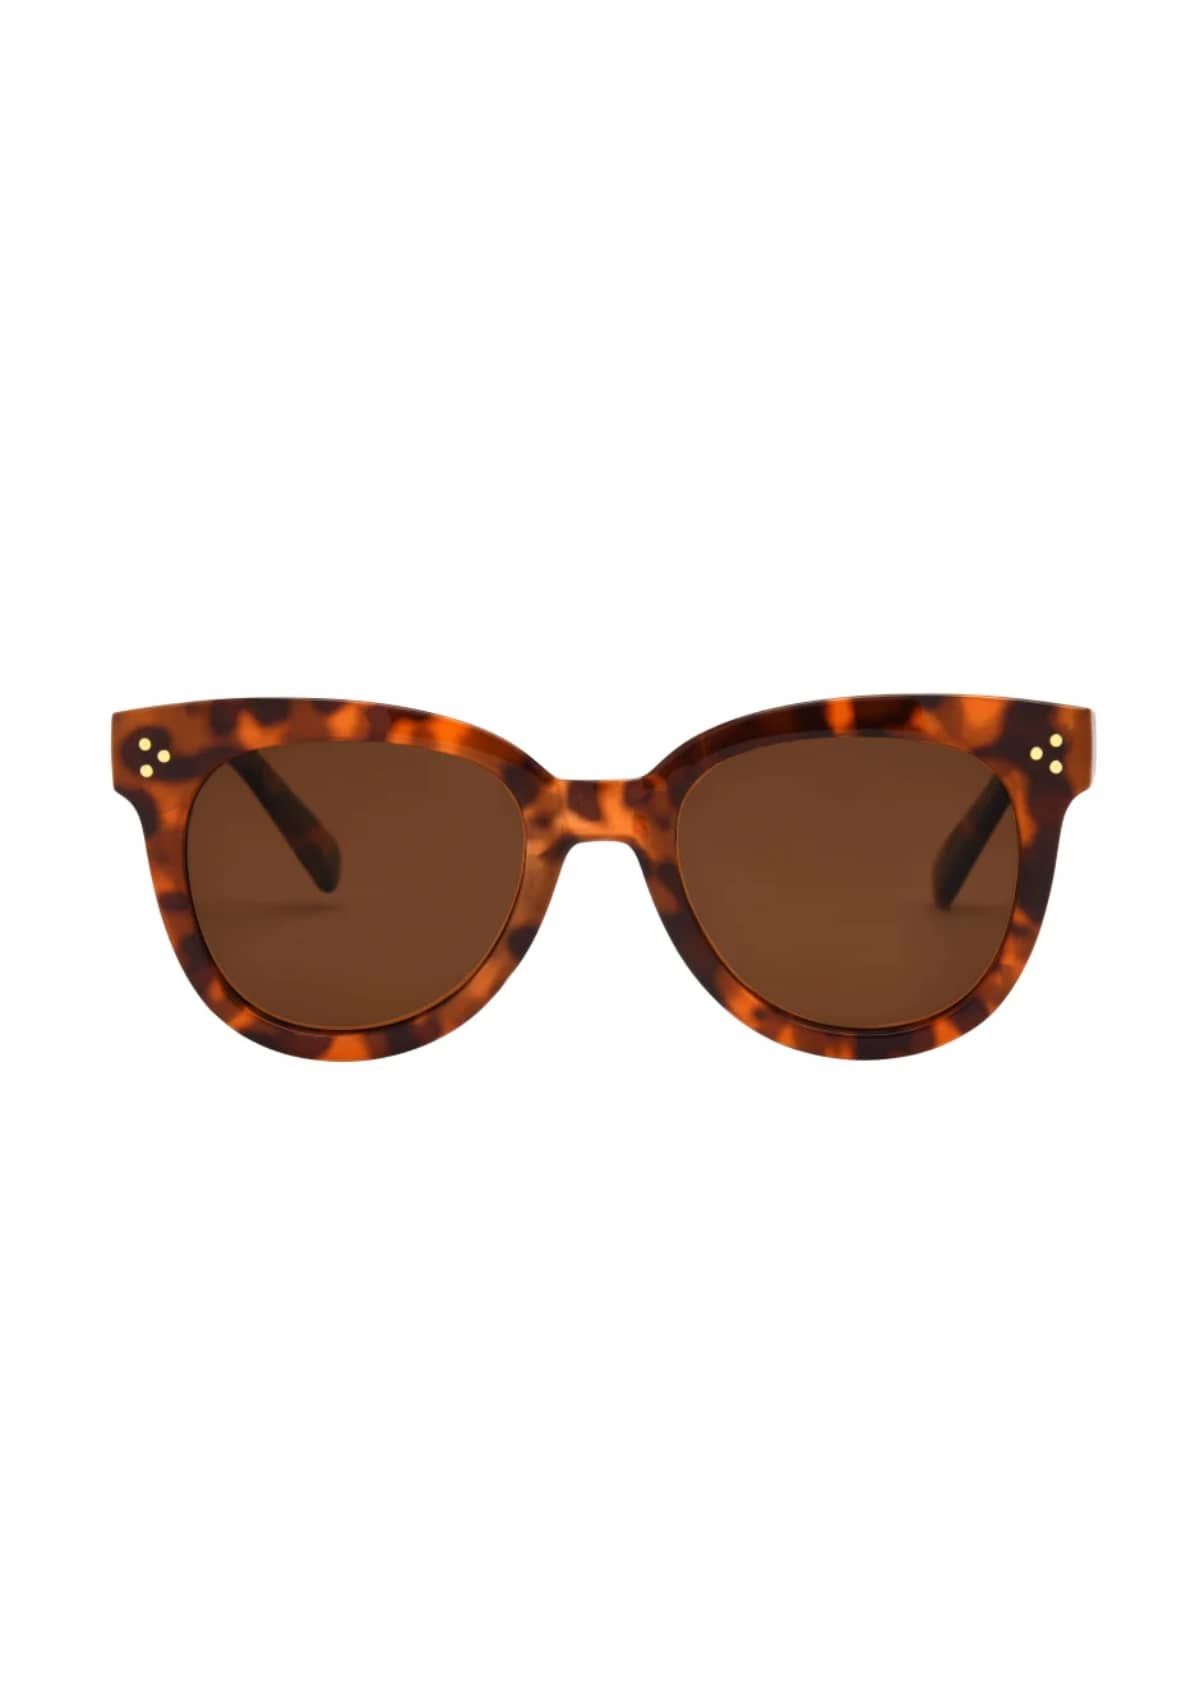 Accessories-Fashion-Sunglasses-Ruby Jane.